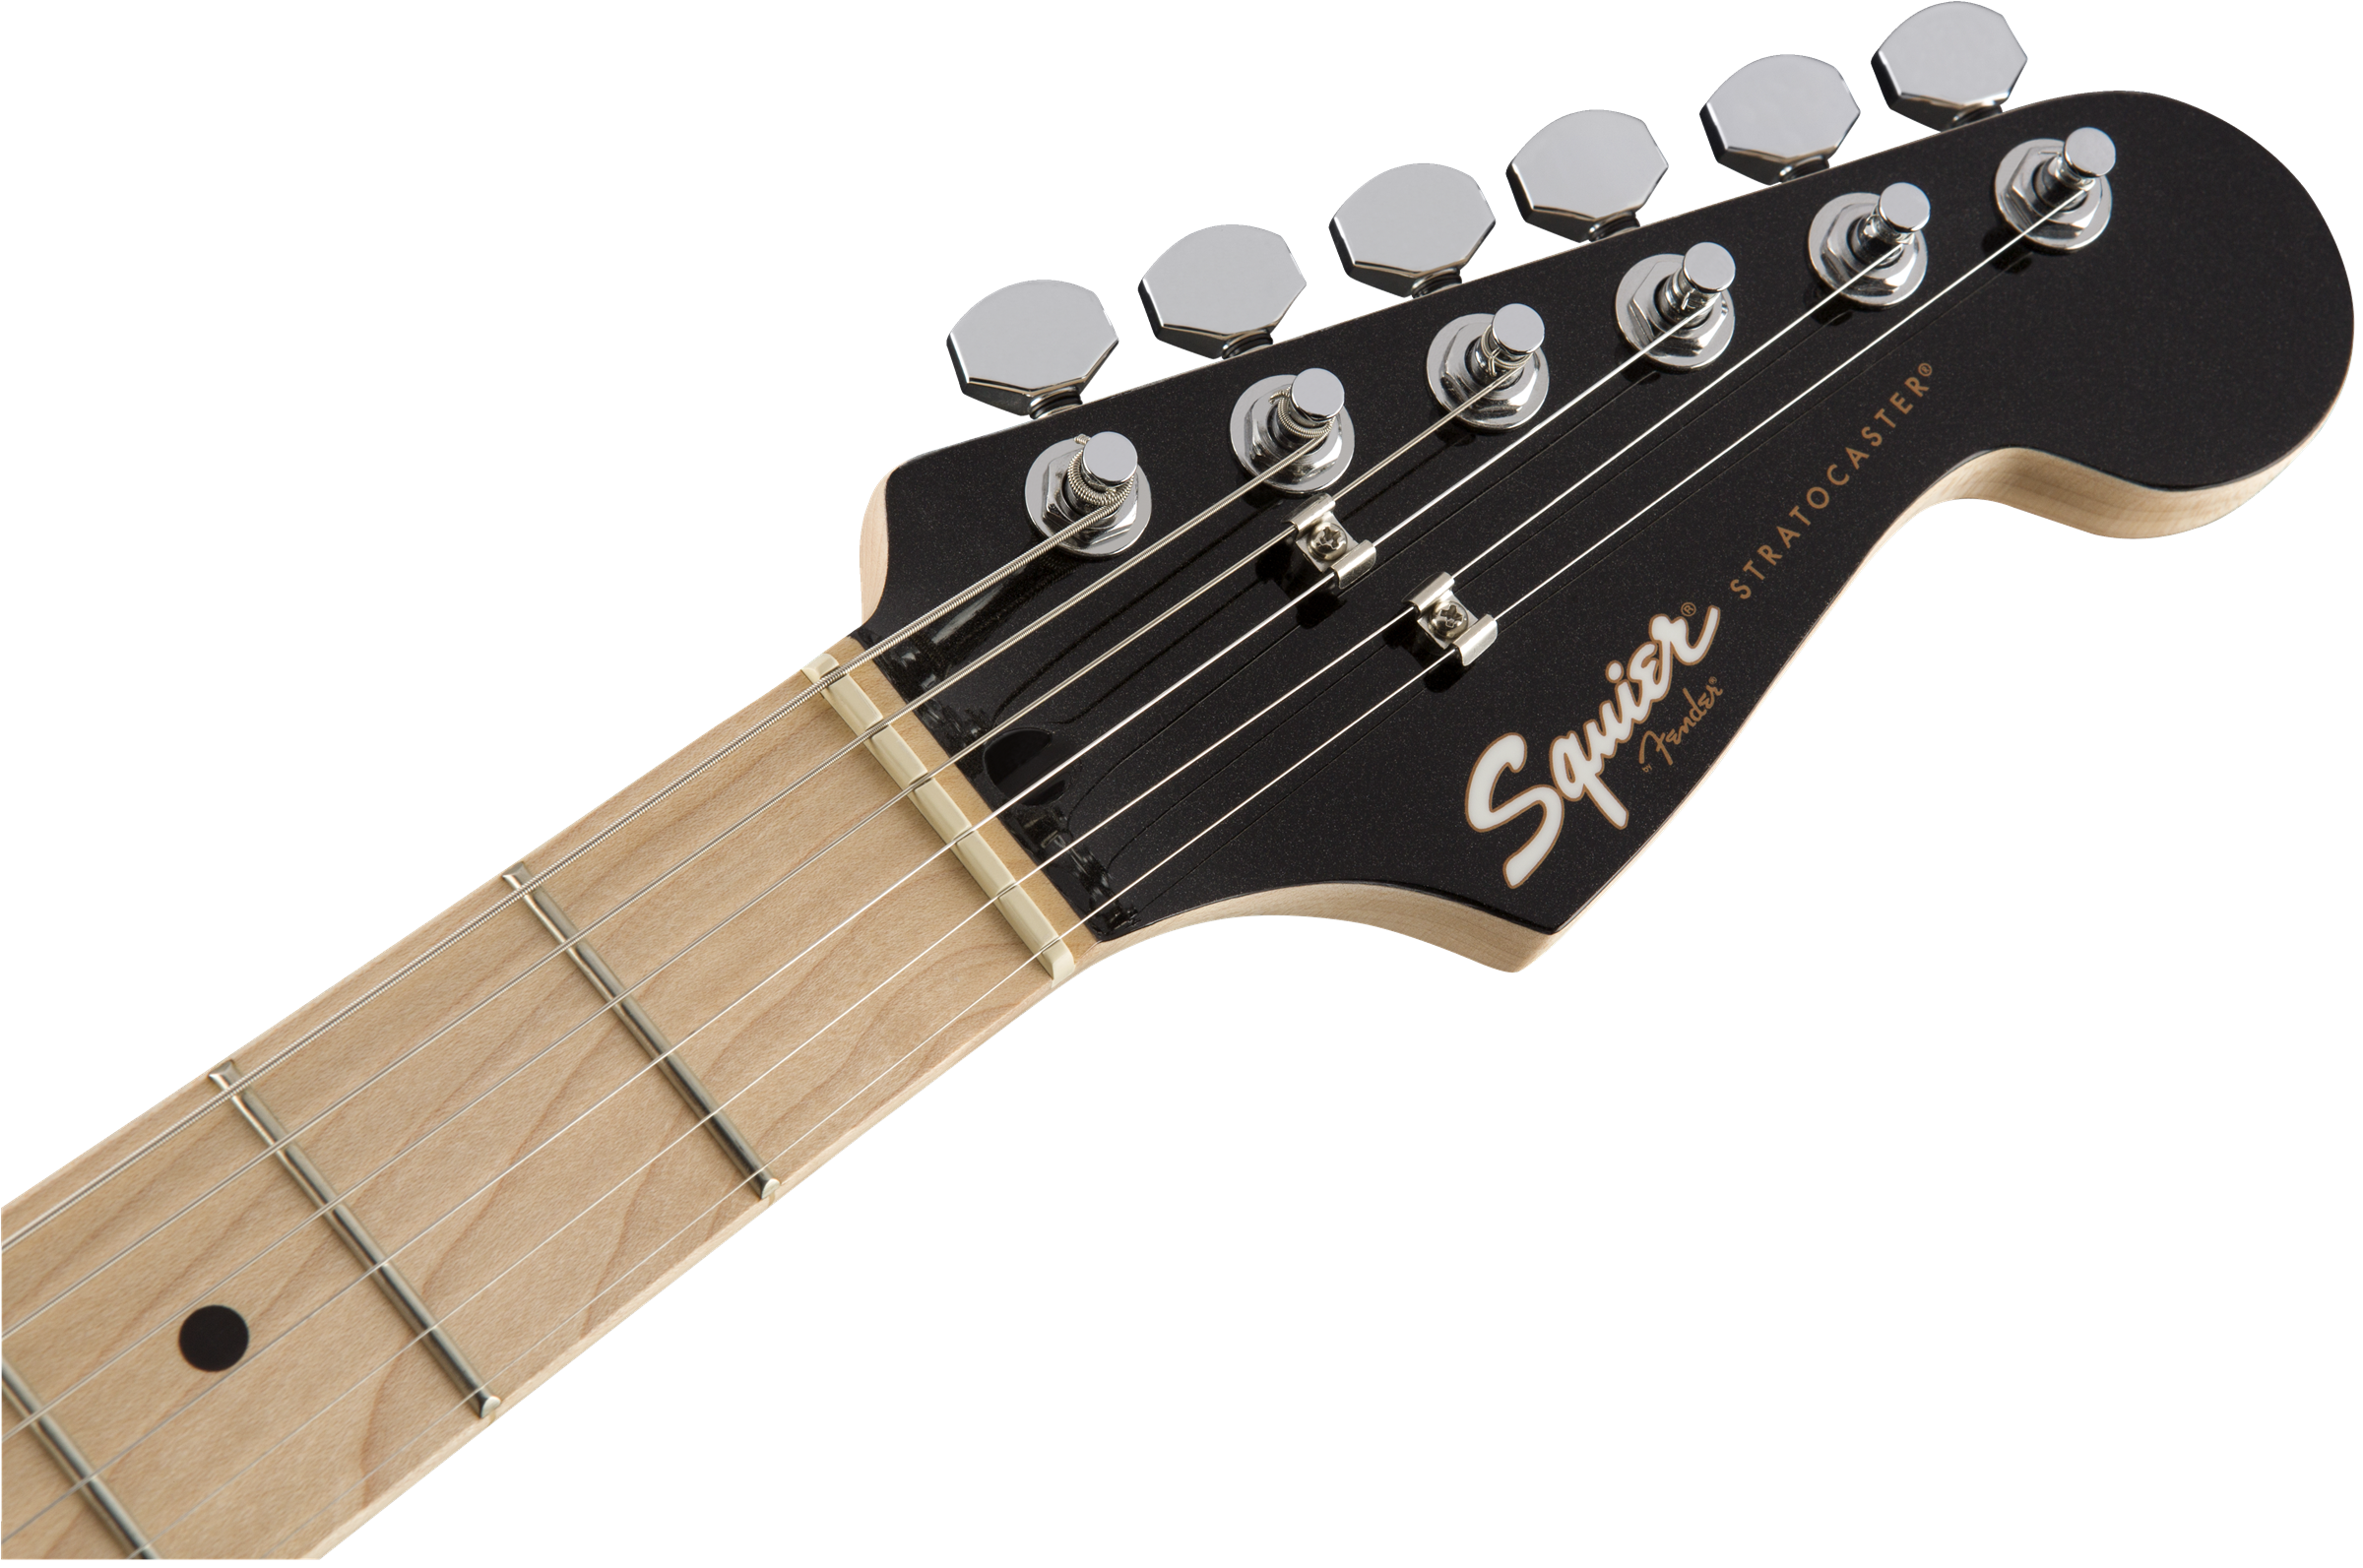 Squier Contemporary Stratocaster HH, Black Metallic